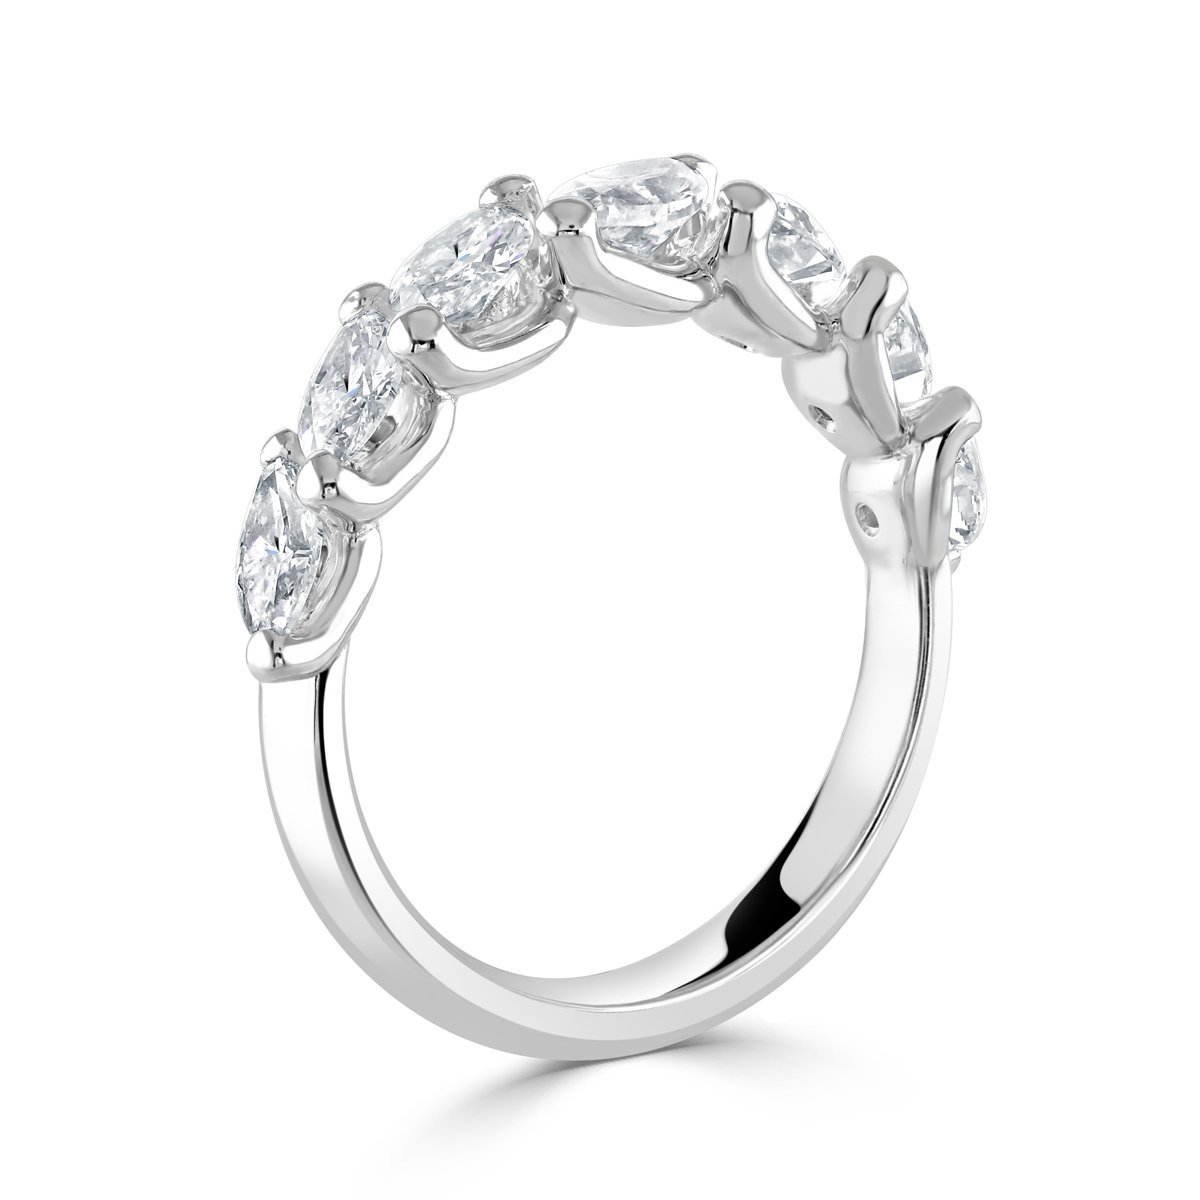 White Gold Marquise Cut Diamond Eternity Ring